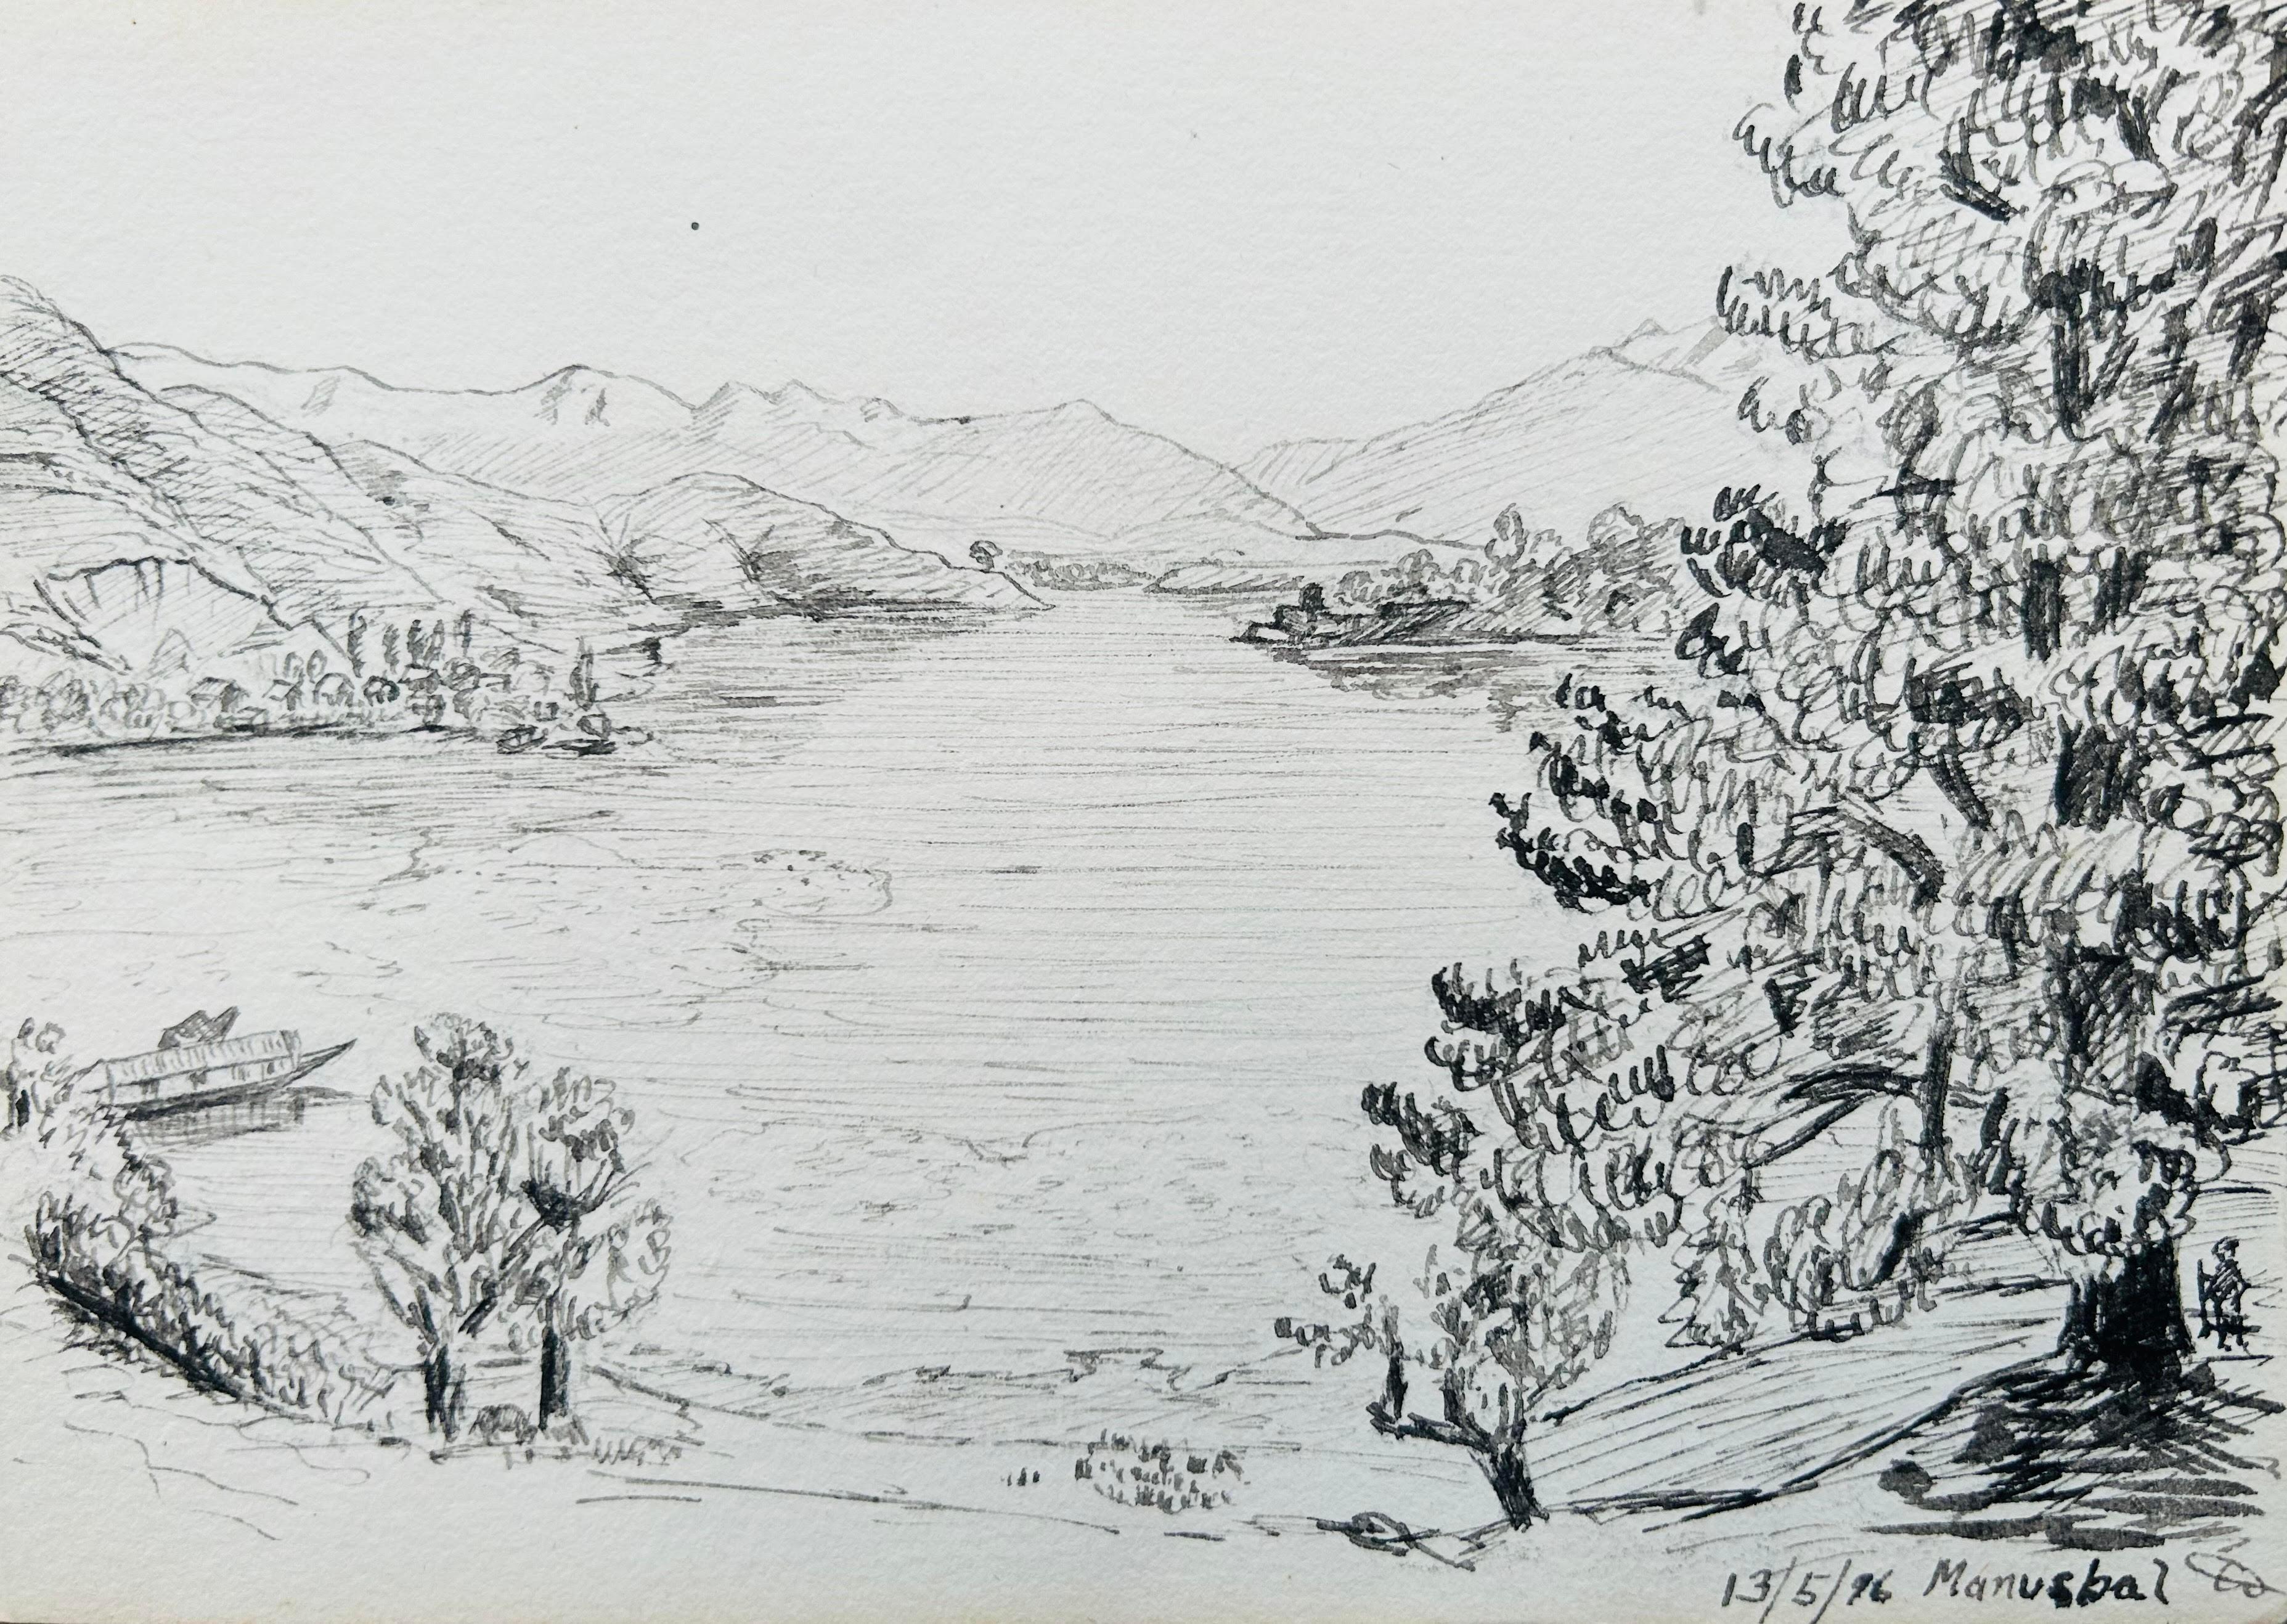 India 3 X 19. Jahrhundert Kaschmir NW Frontier Field Sketches Manasbal Lake, Kashmir im Angebot 1